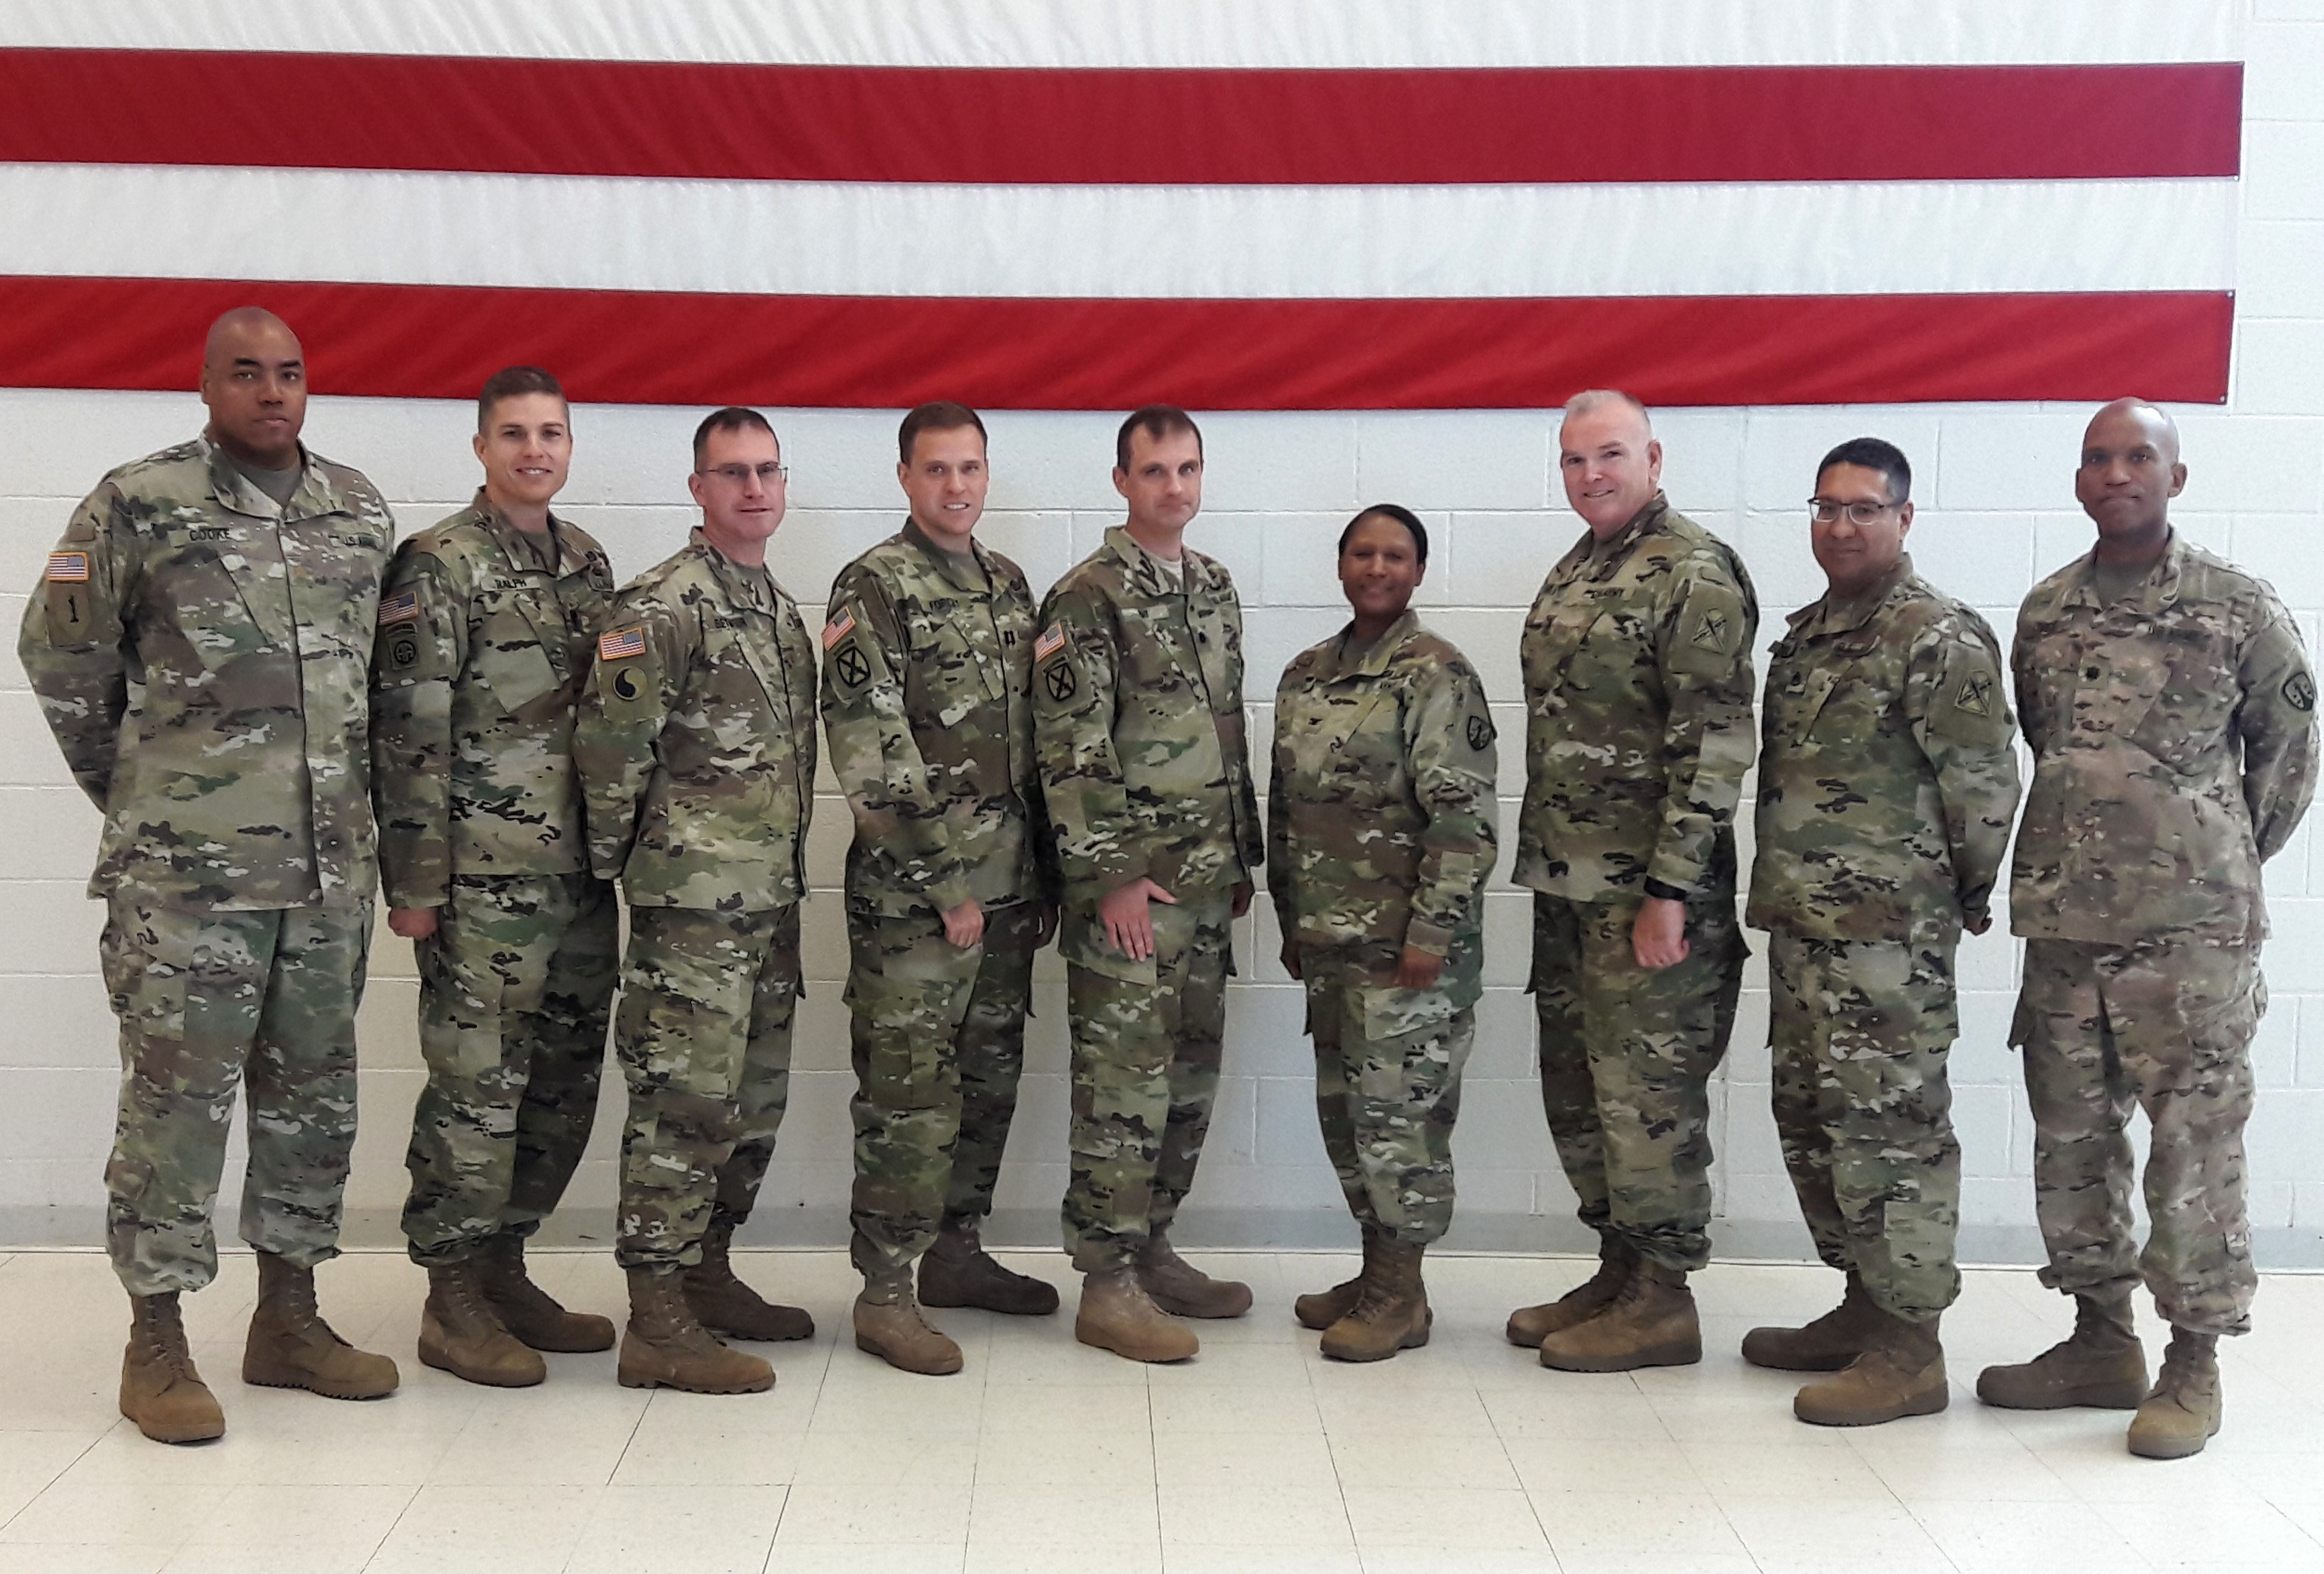 MICCFort Belvoir readies Reserve contingency contracting Soldiers